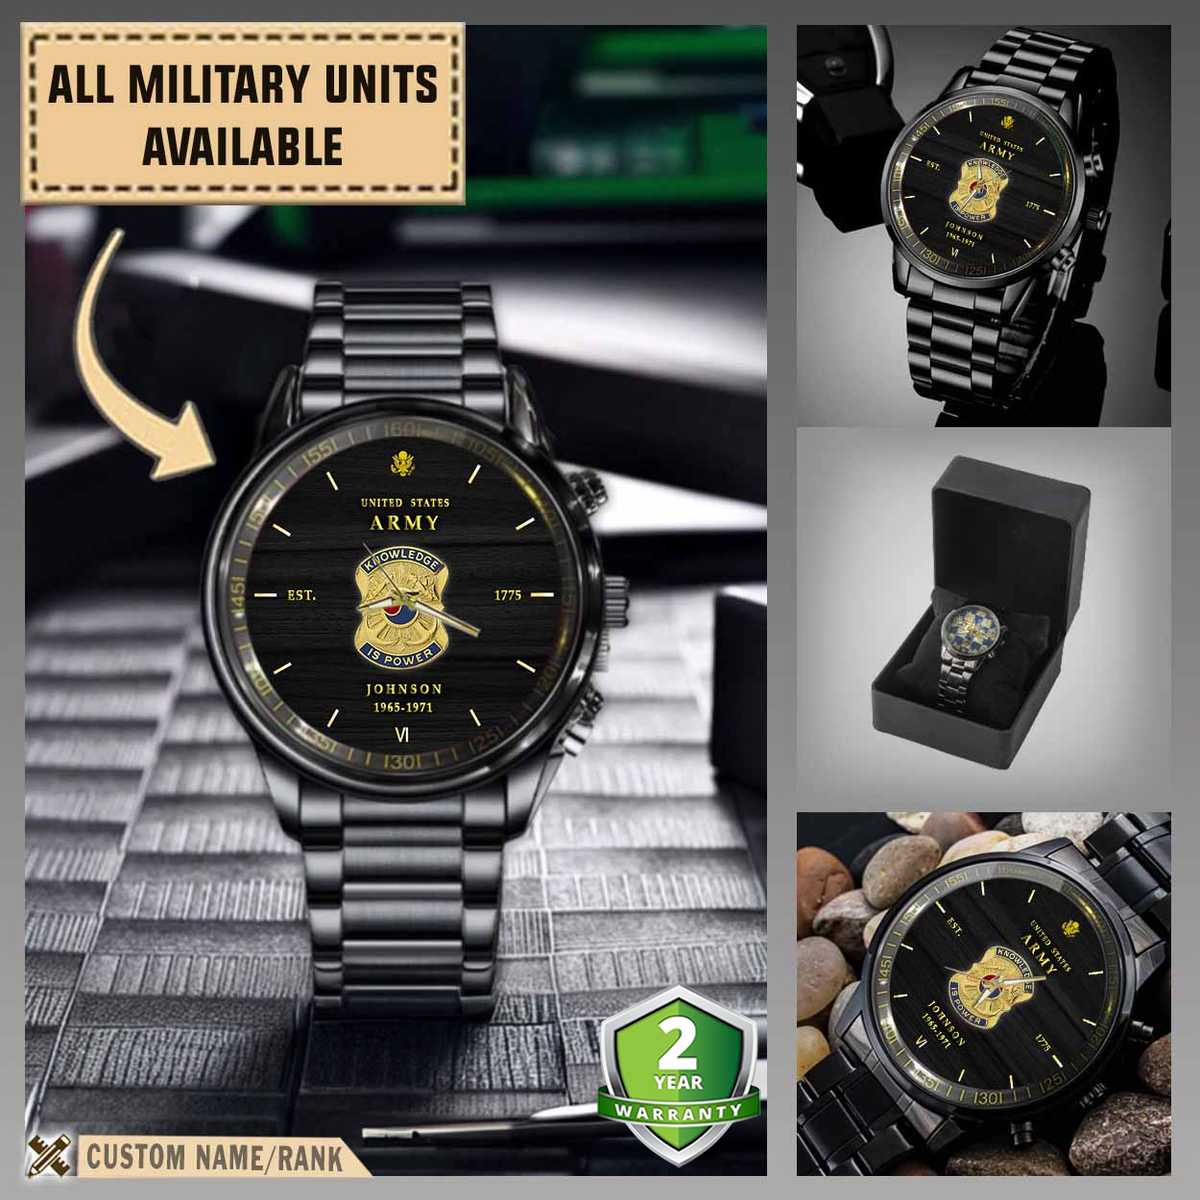 163rd mi bn 163rd military intelligence battalionmilitary black wrist watch 5e0yu